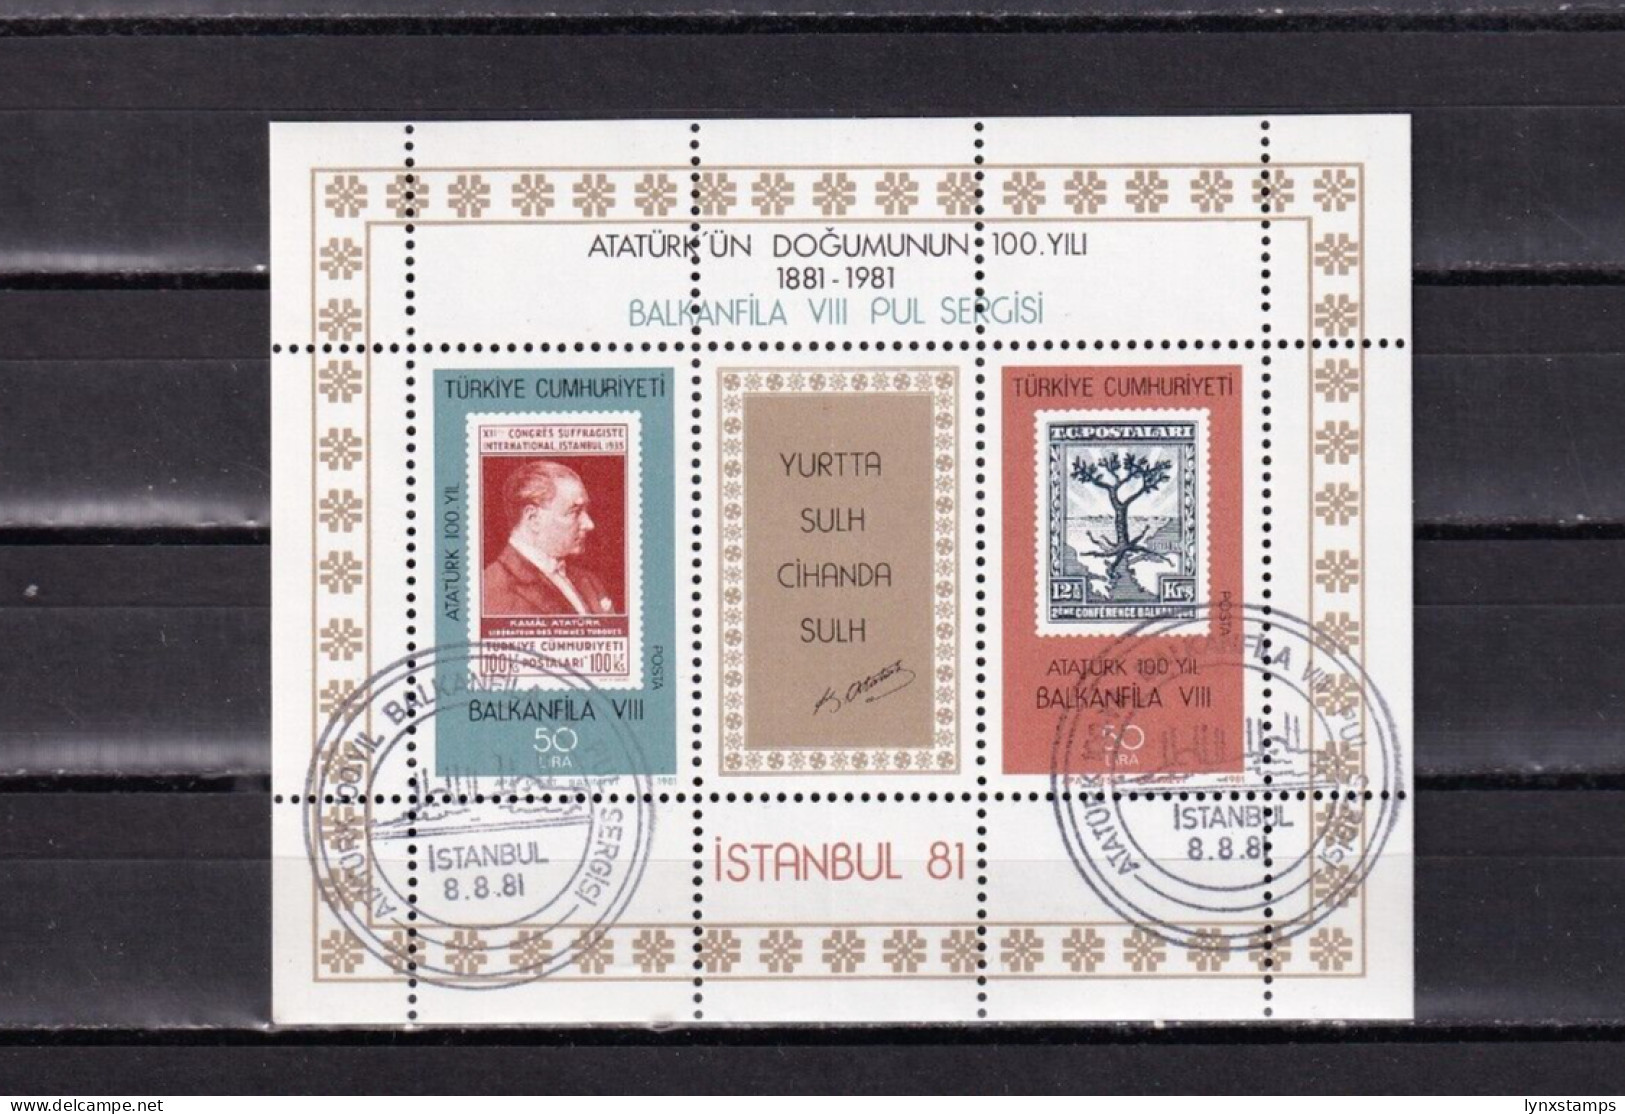 SA03 Turkey 1981 Balkanfila VIII Stamp Exhibition, Ankara Minisheet Used - Gebruikt